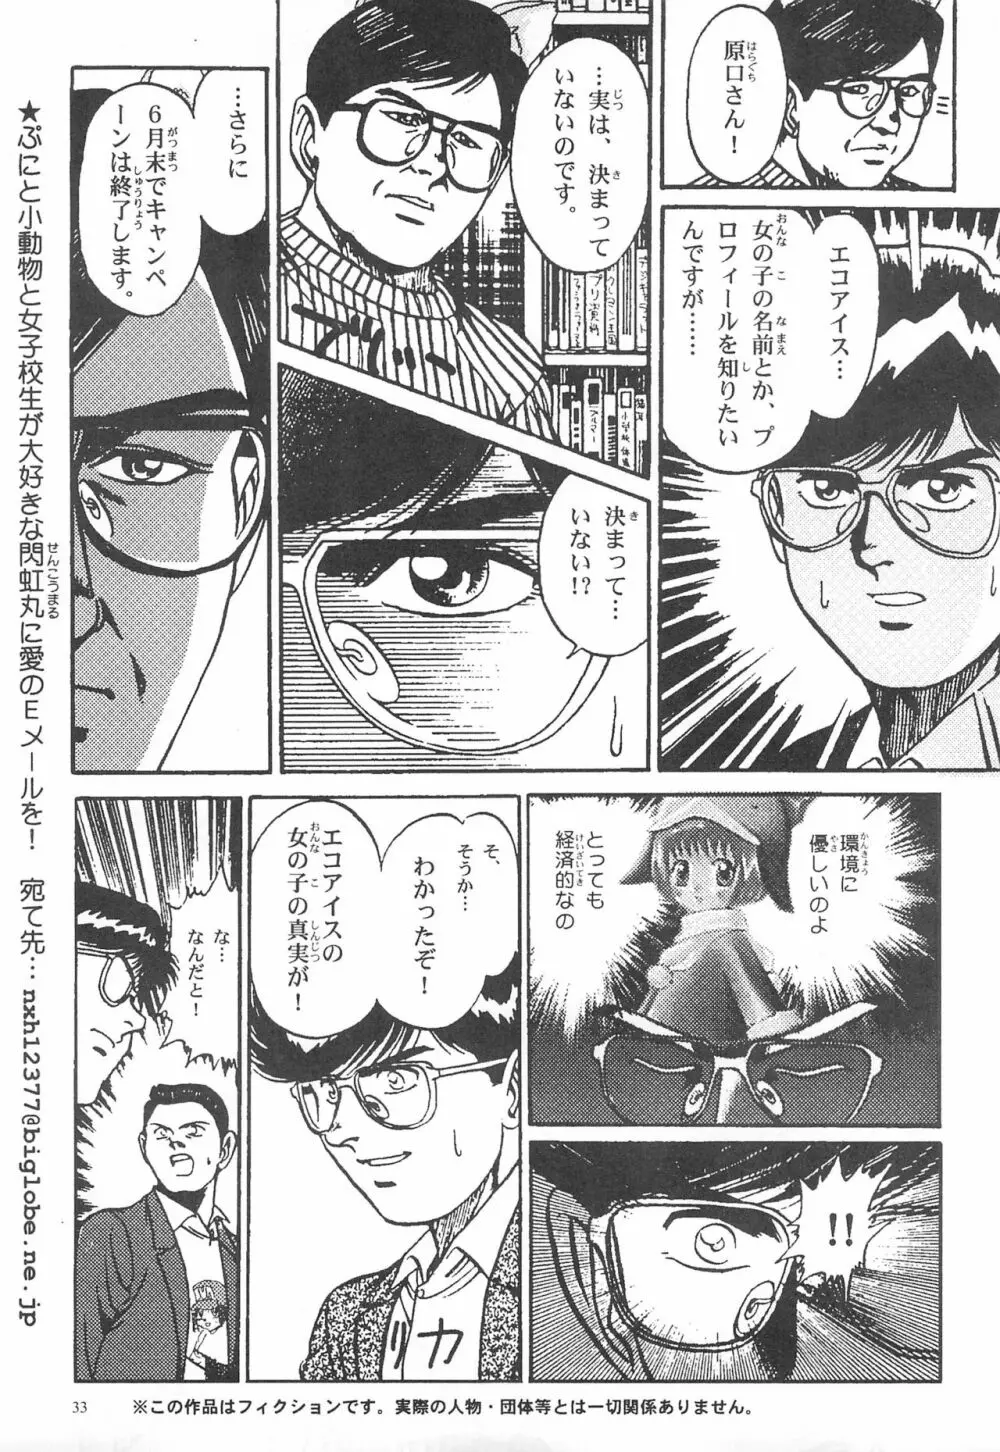 閃虹丸作品集 Vol.1 33ページ